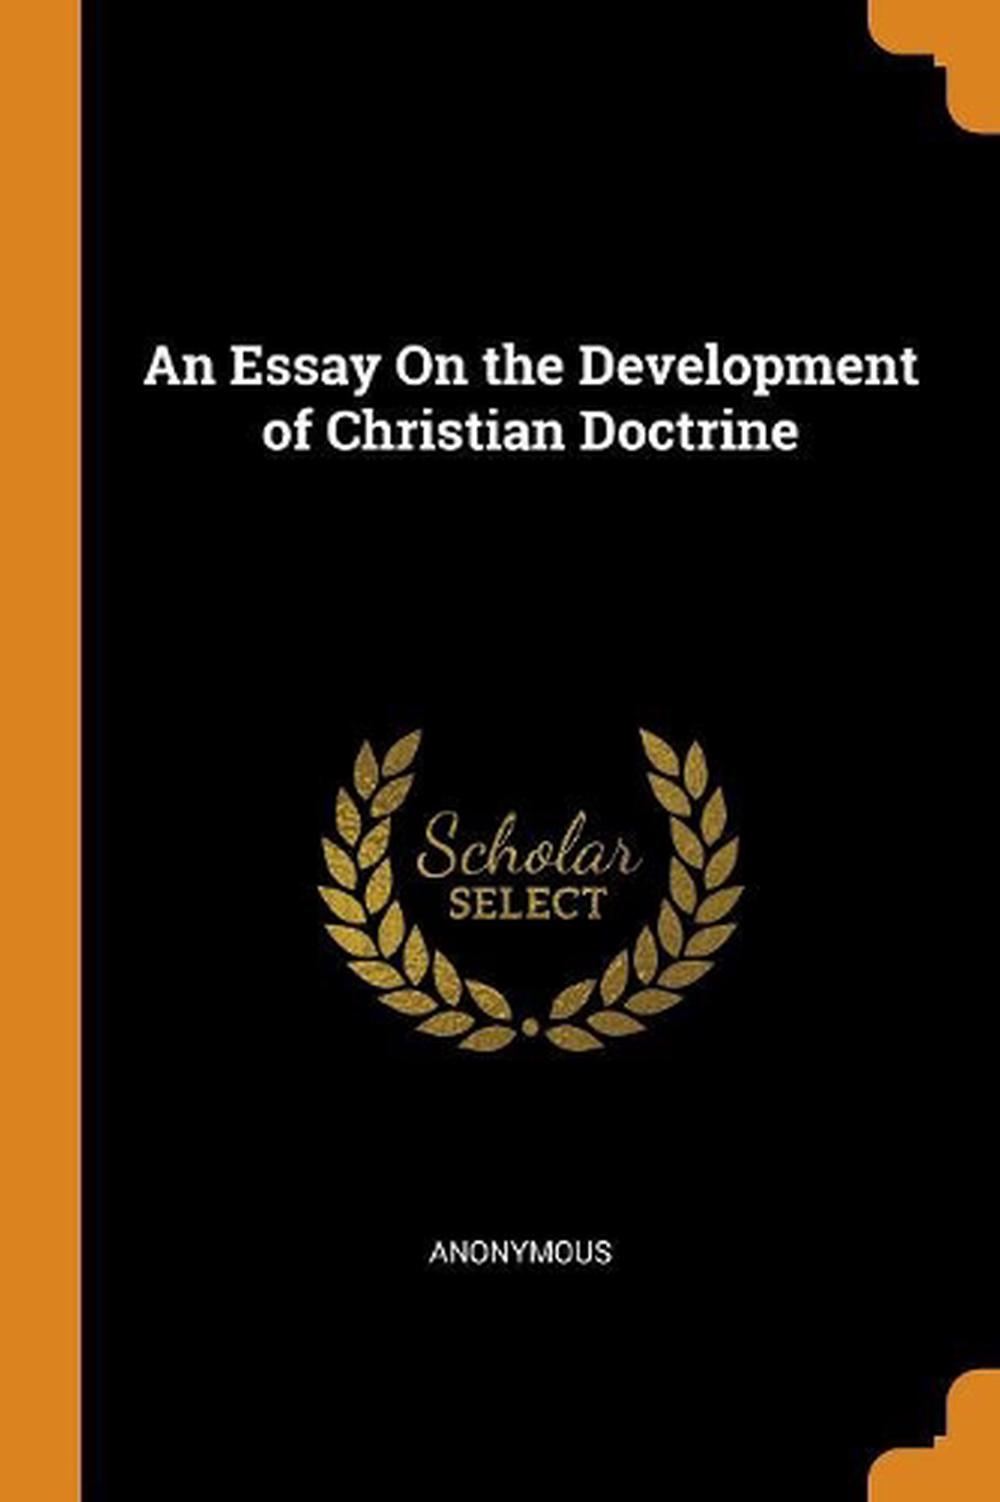 essay on development of christian doctrine